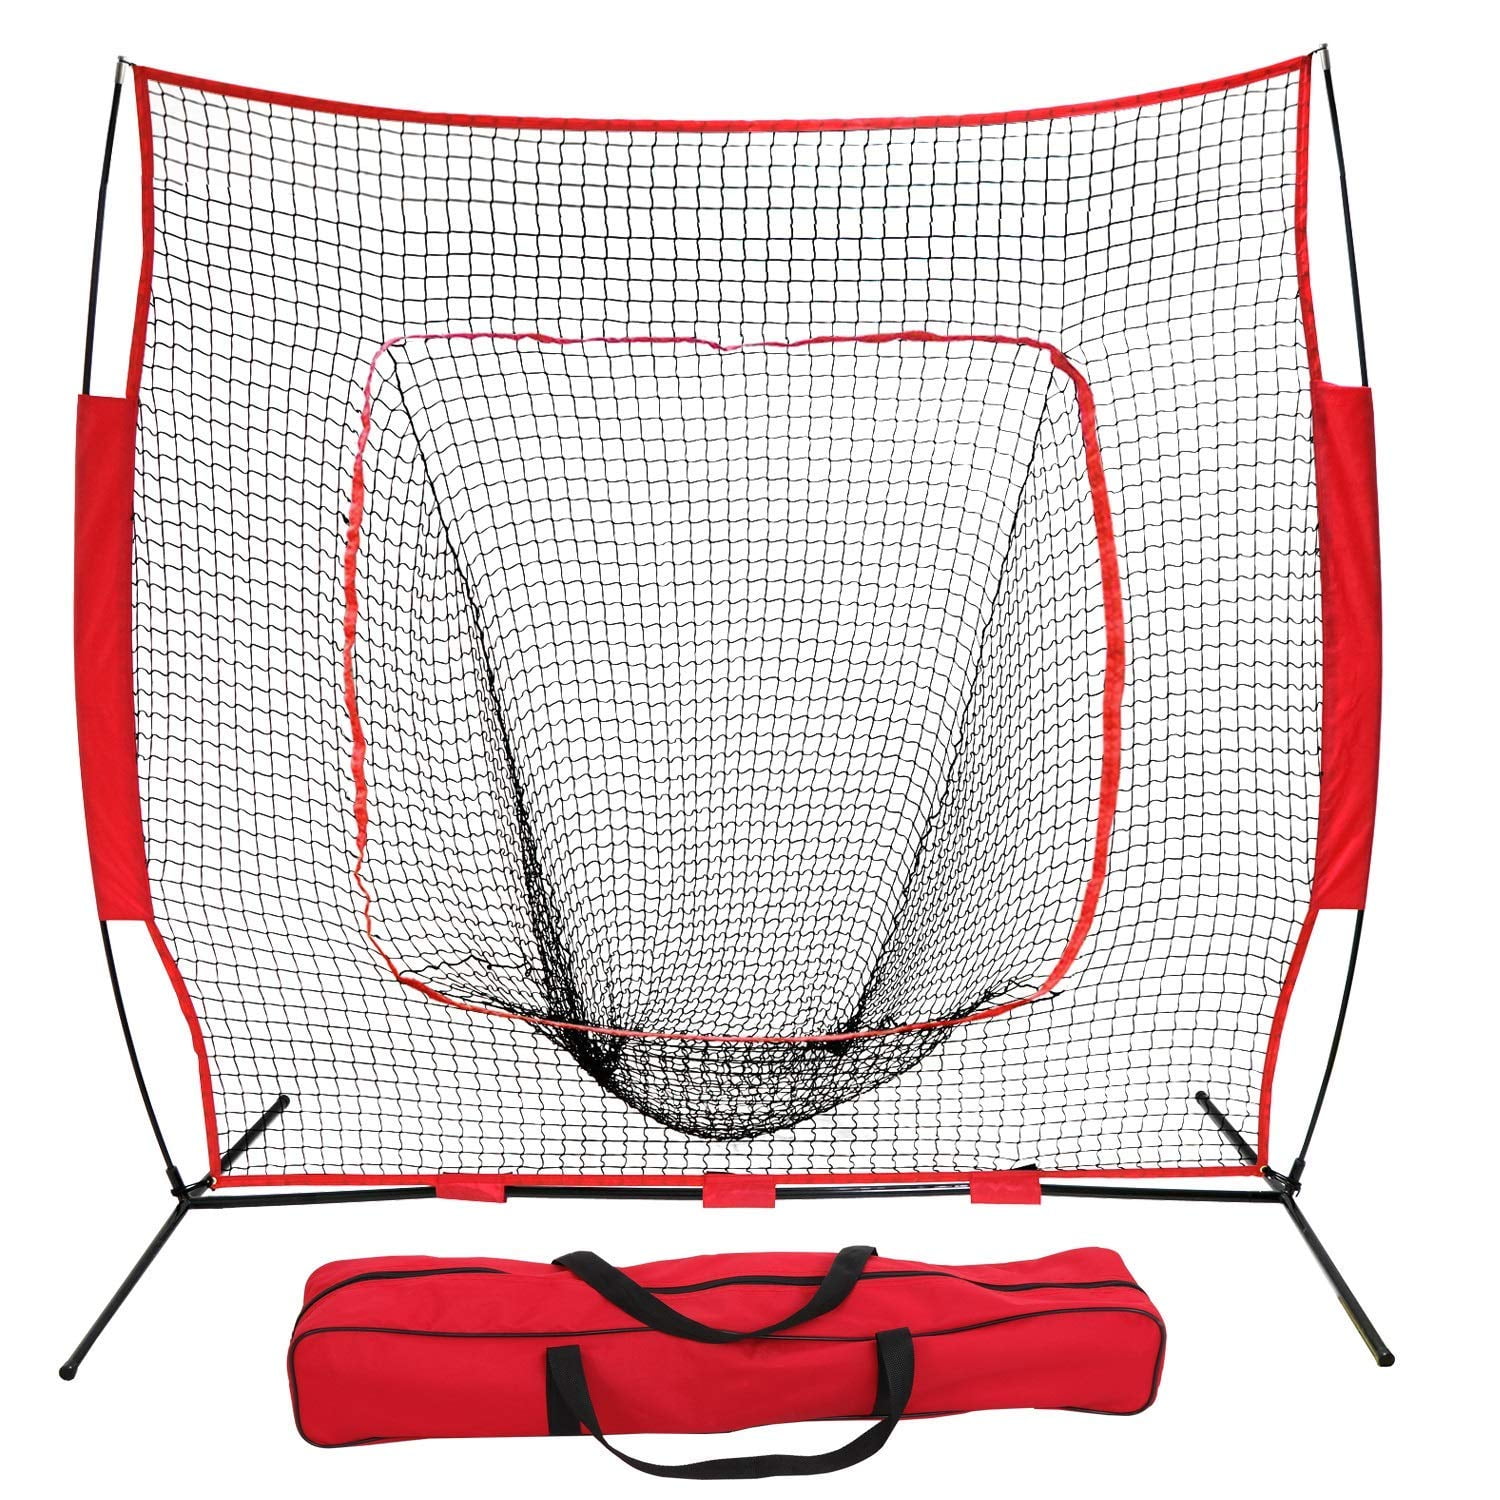 7 ft x 4 ft Baseball Softball Practice Net Batting Training Net with Carry Bag 